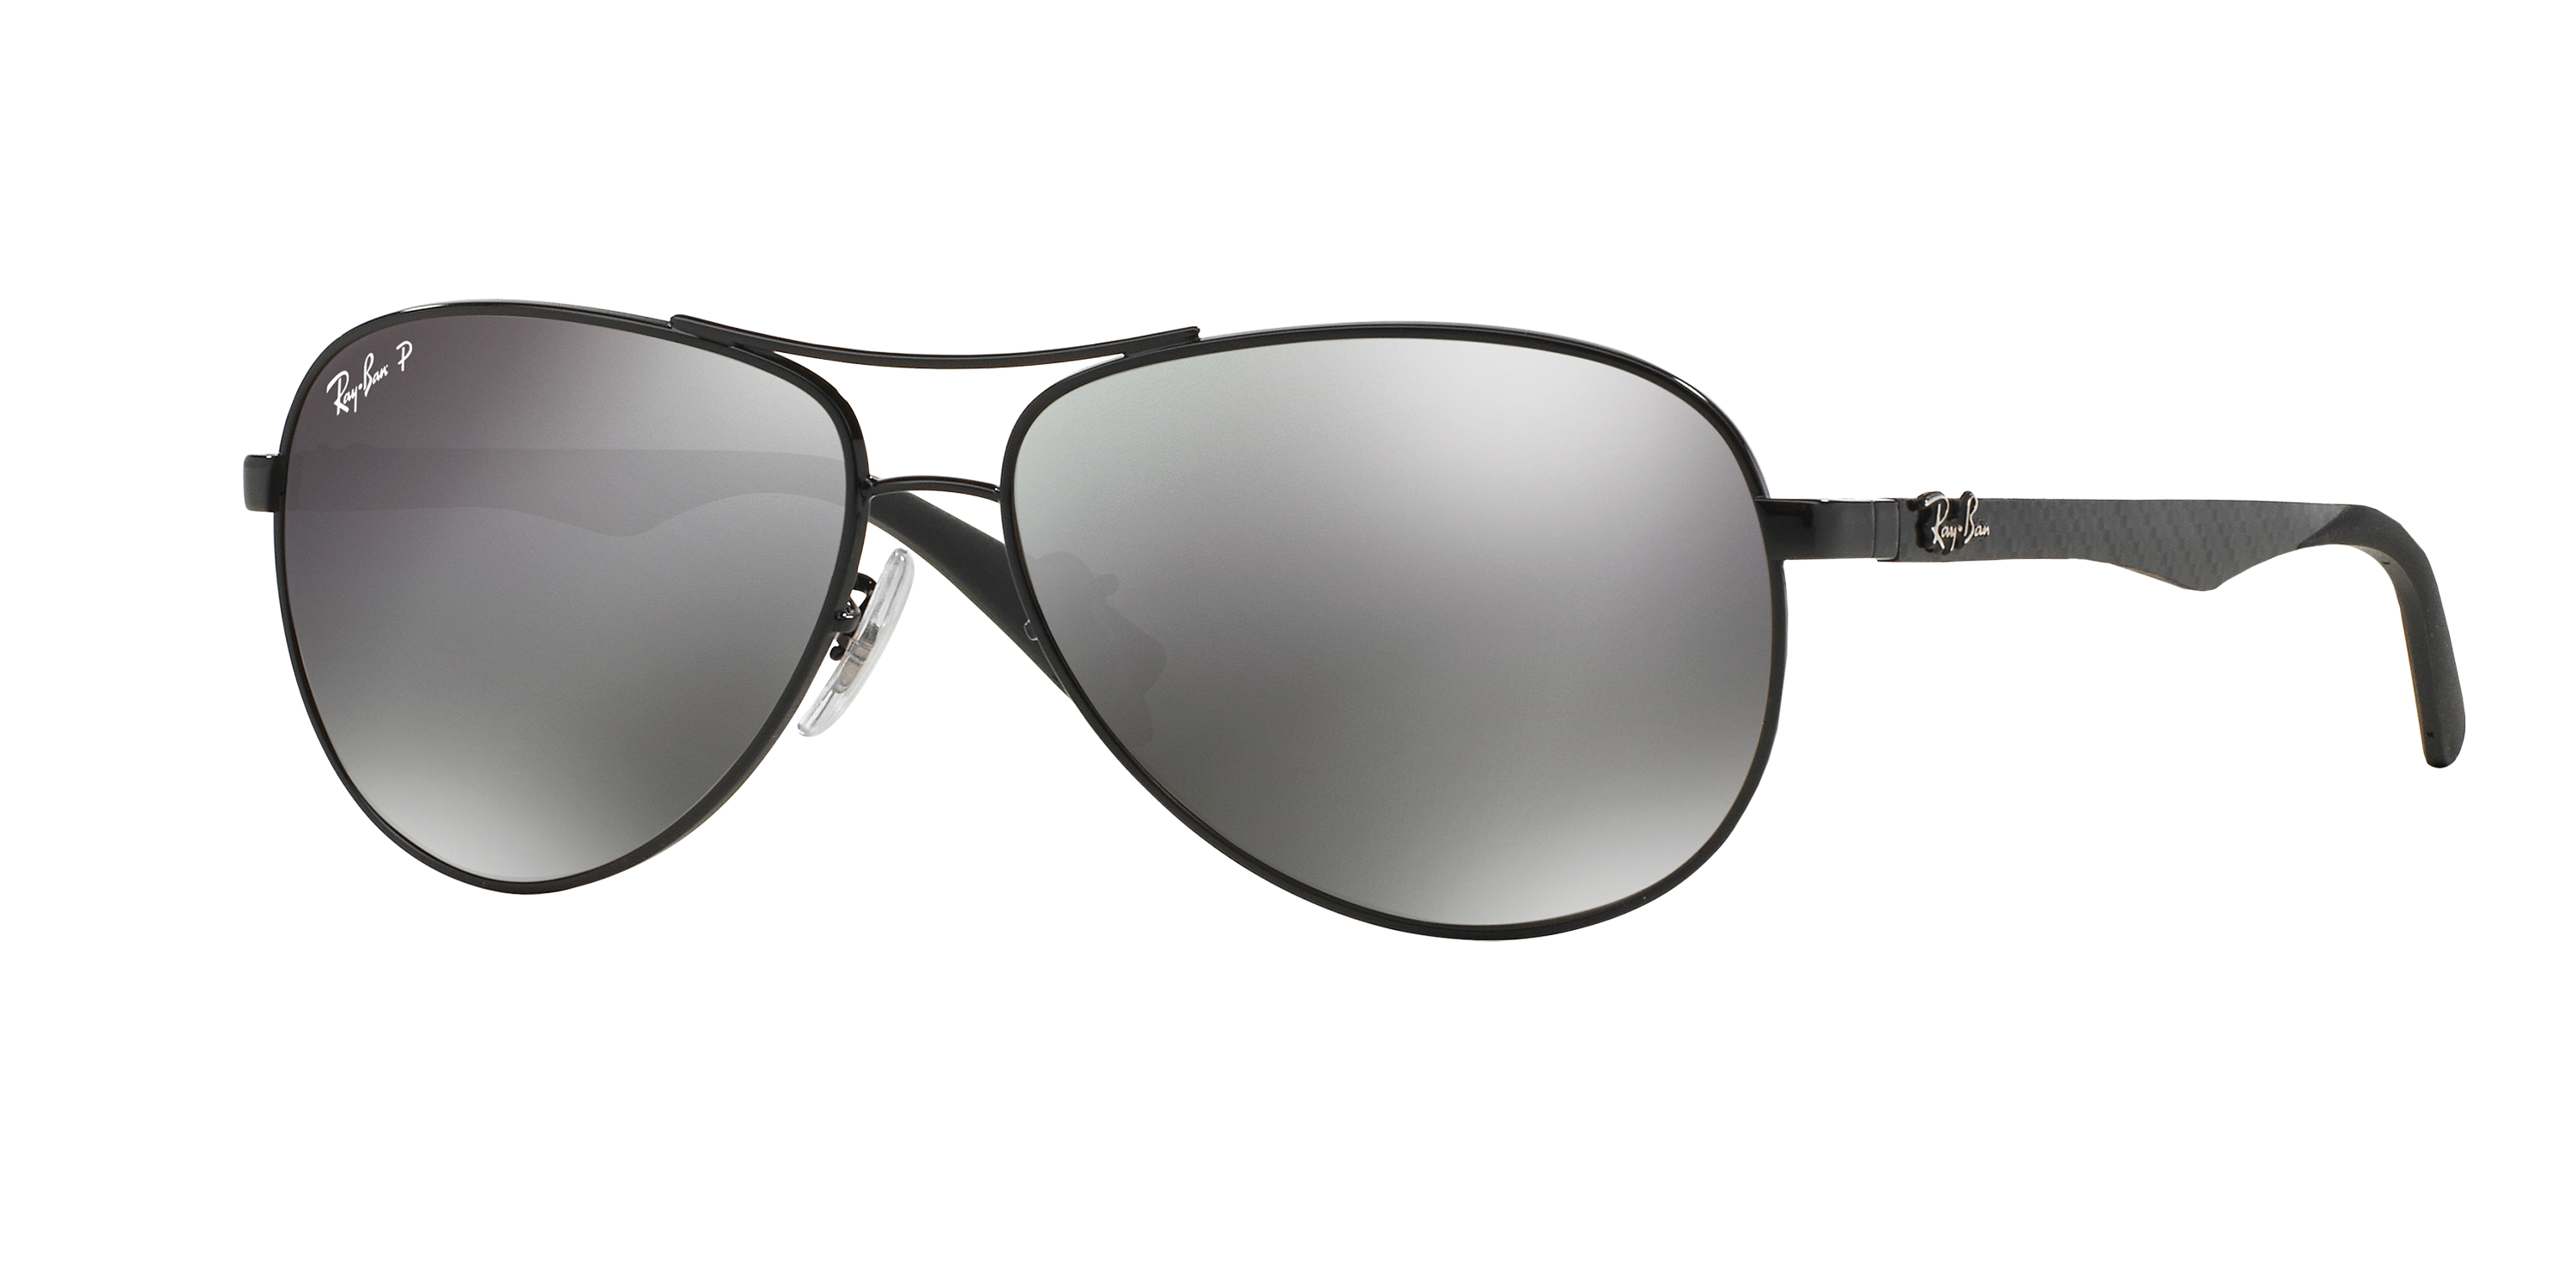 Ray-Ban RB8313 Polarized Sunglasses for Men - Black/Gray Mirror - Standard